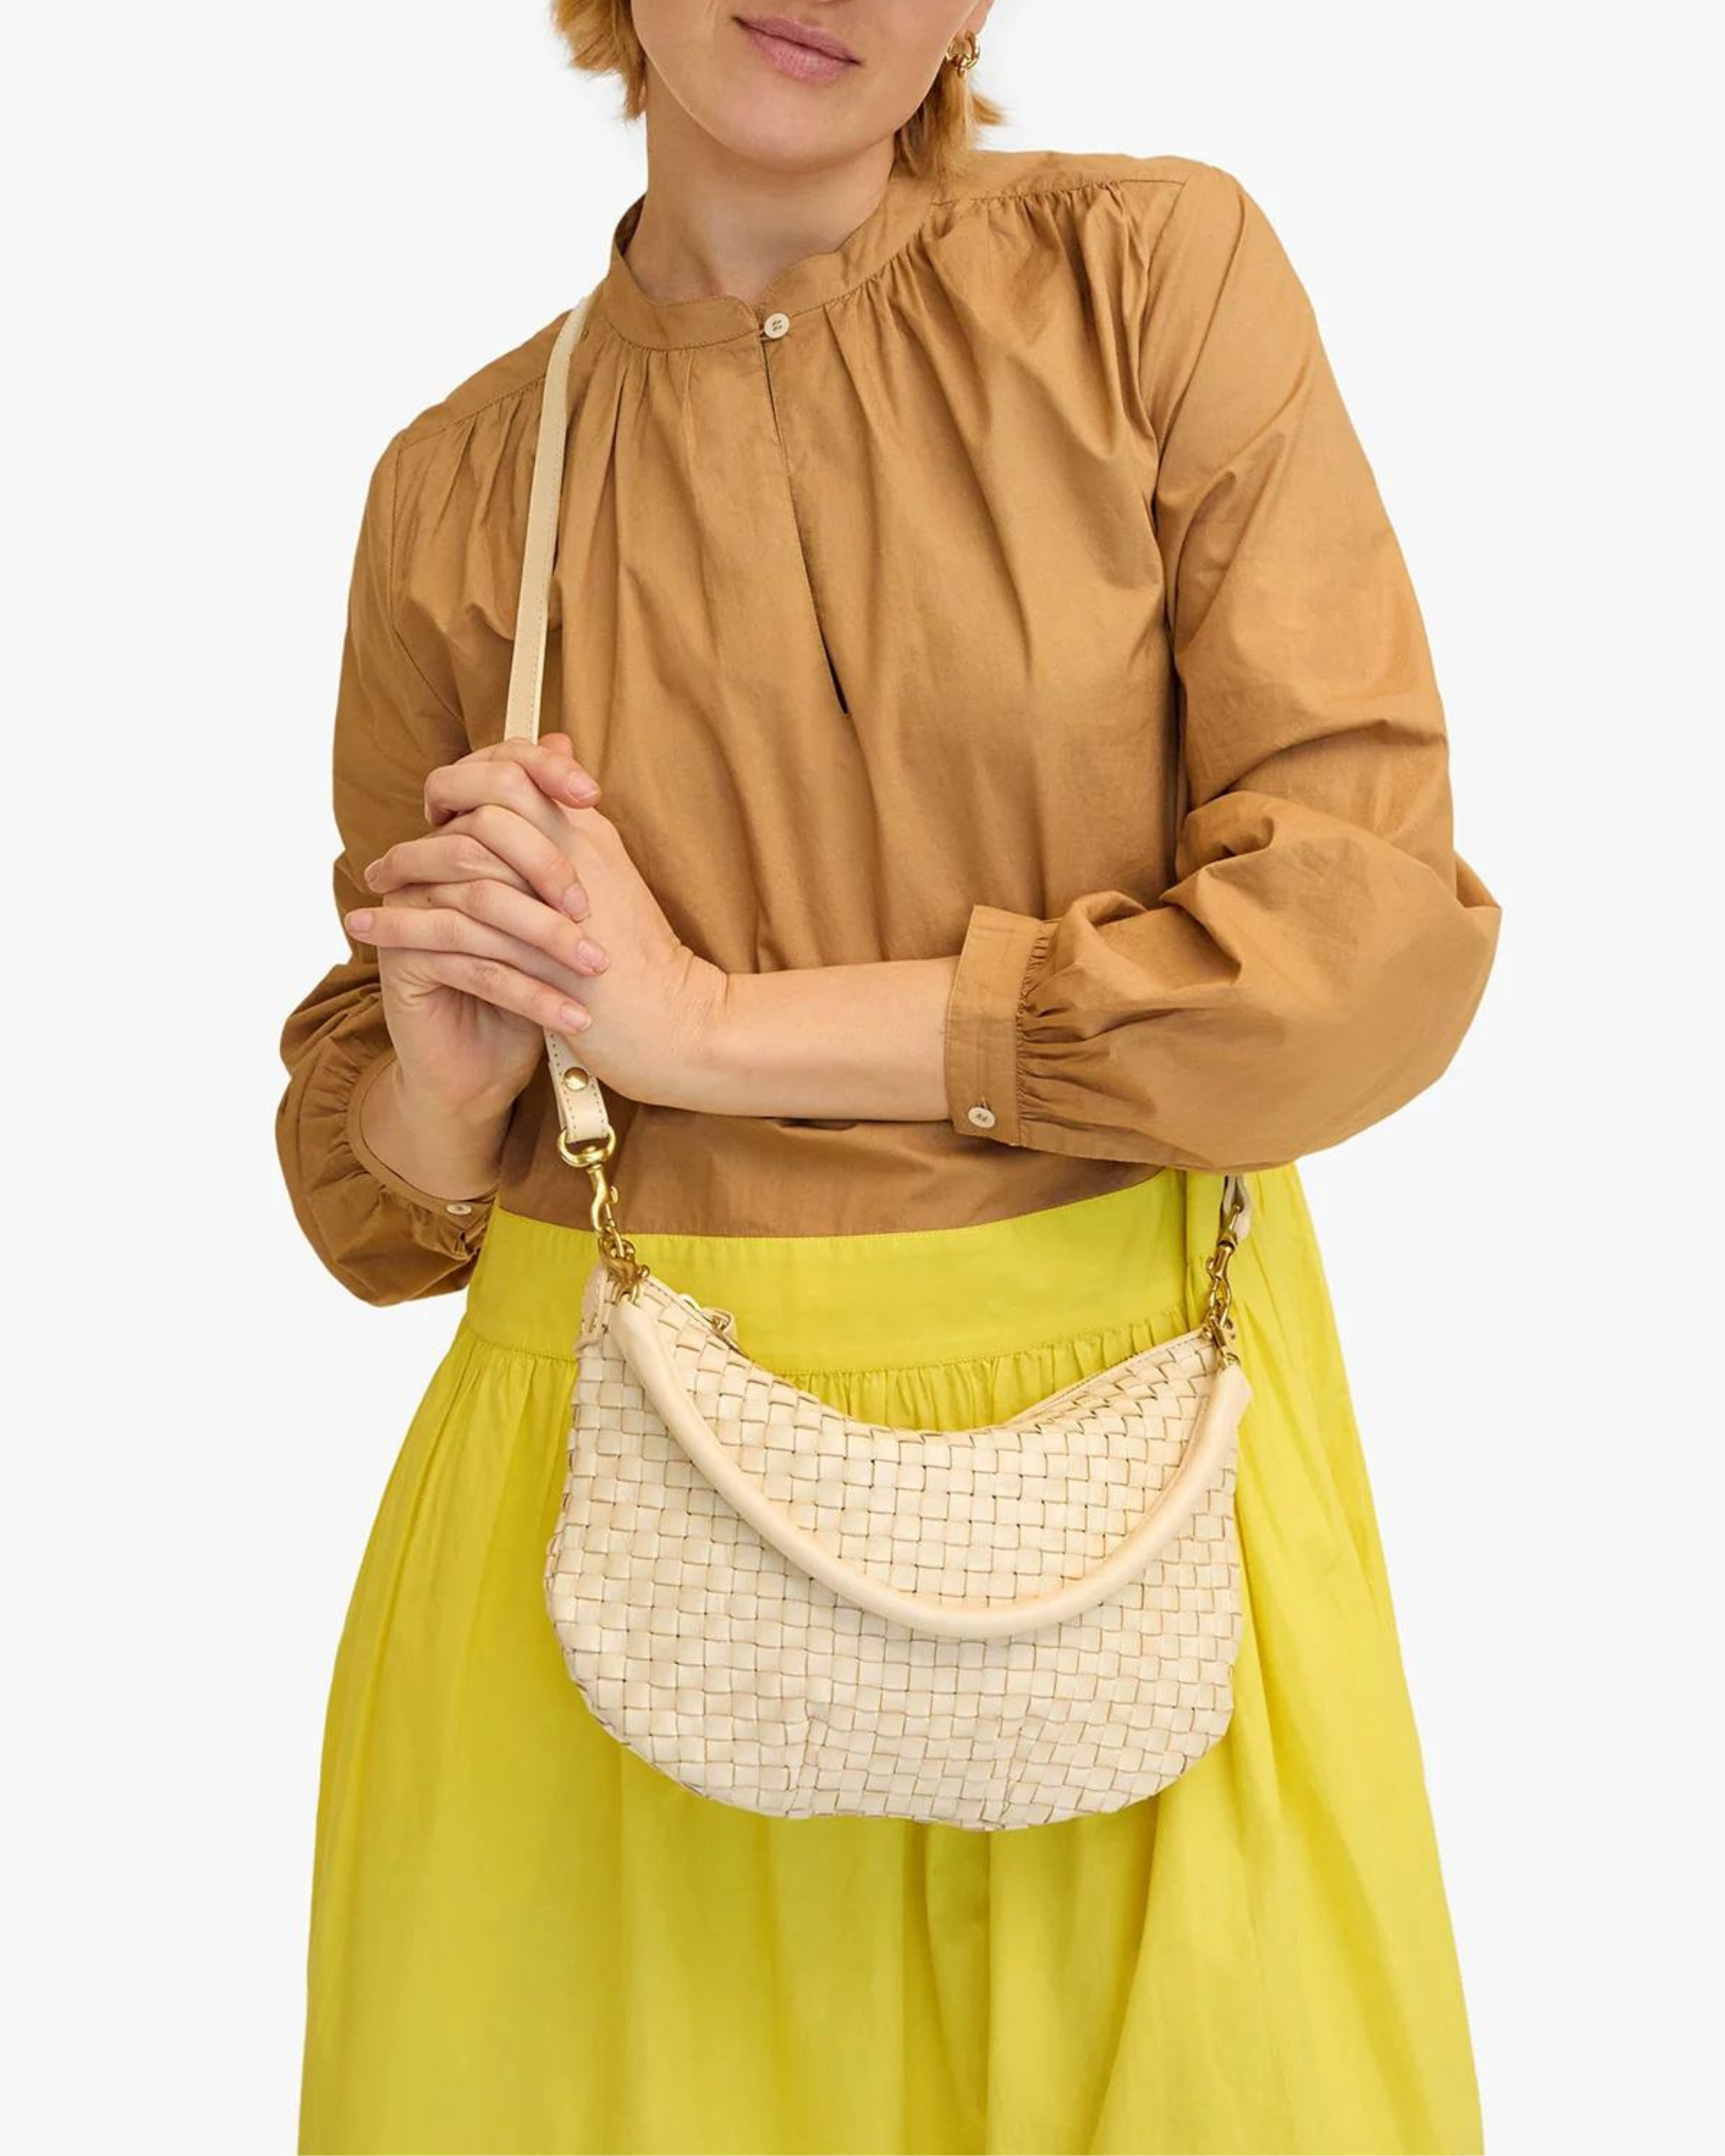 Clare V. Petit Moyen Messenger Bag in Cream Woven Checker